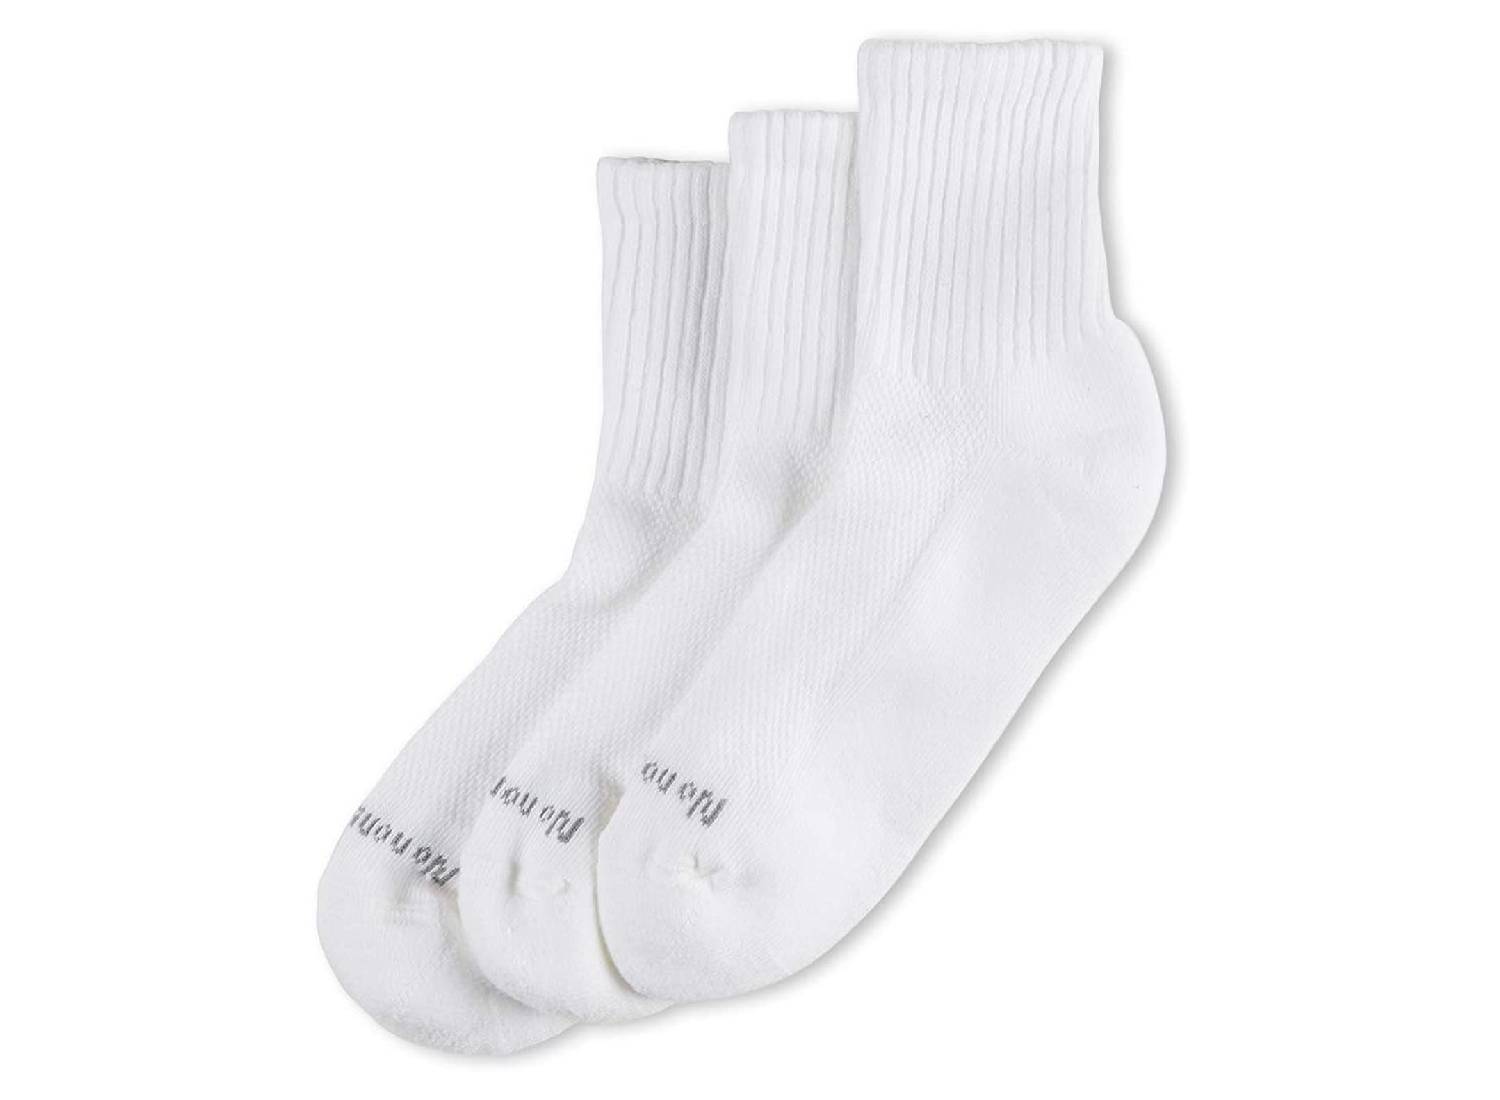 A set of white mini crew cut socks for women